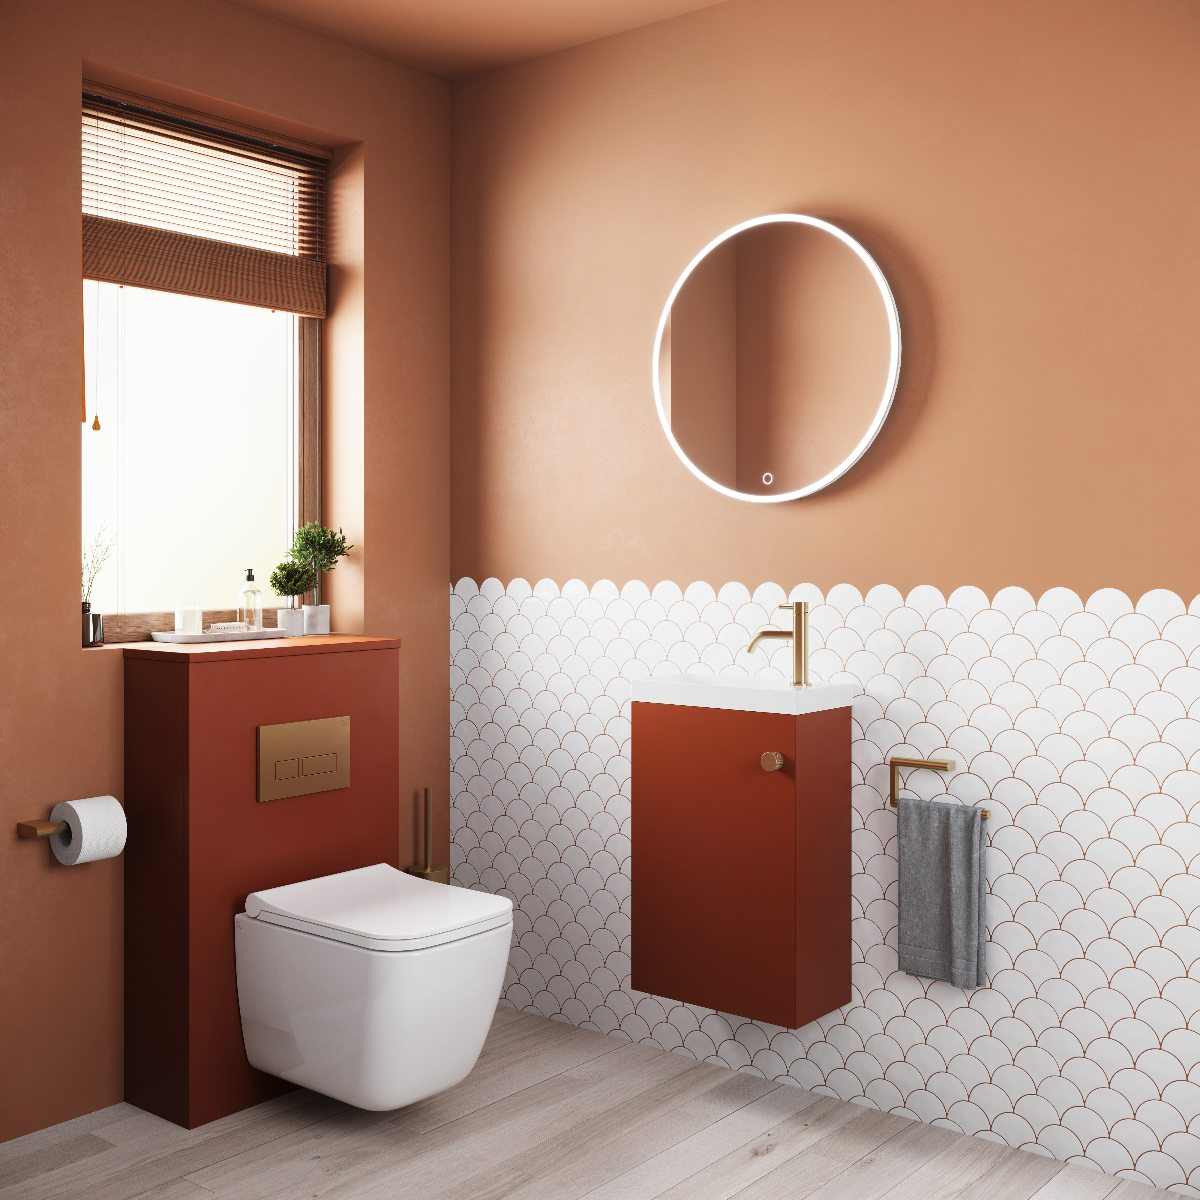 Terracotta bathroom furniture